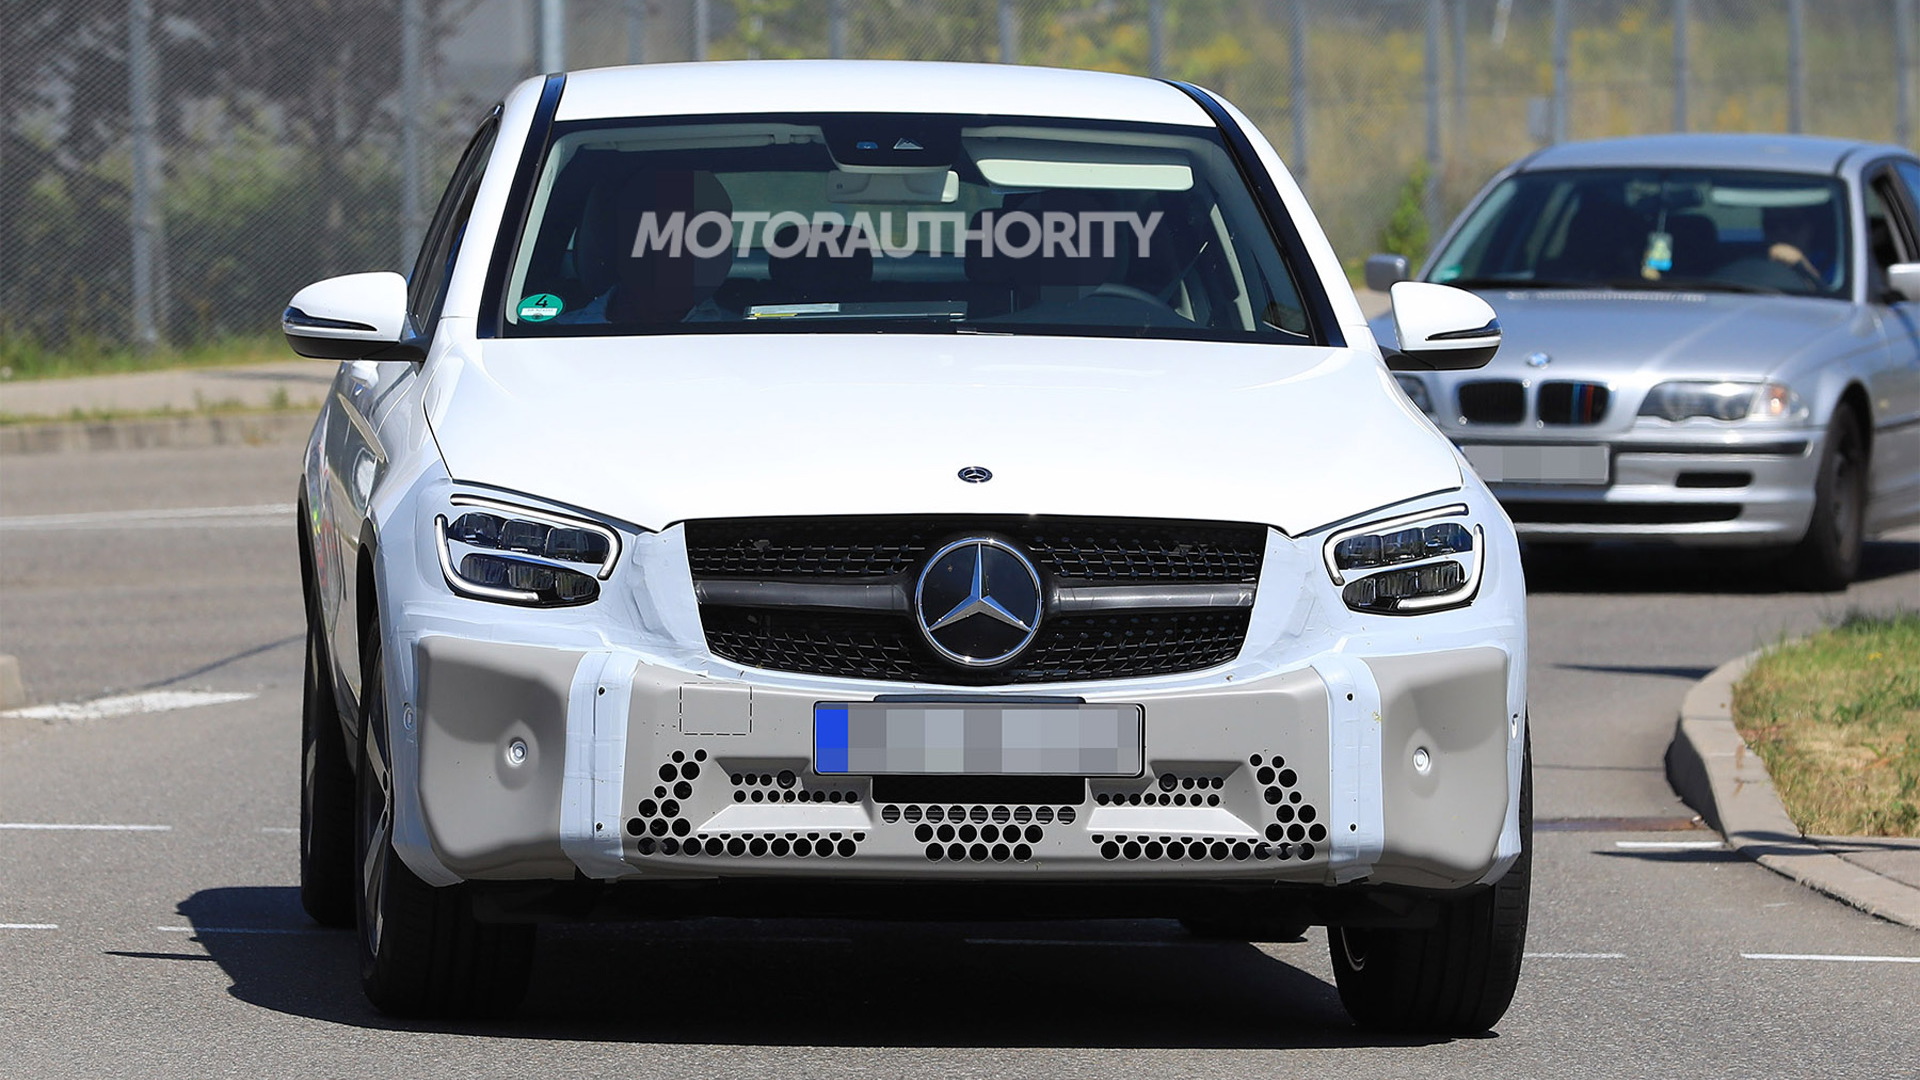 2020 Mercedes-Benz GLC Coupe facelift spy shots - Image via S. Baldauf/SB-Medien